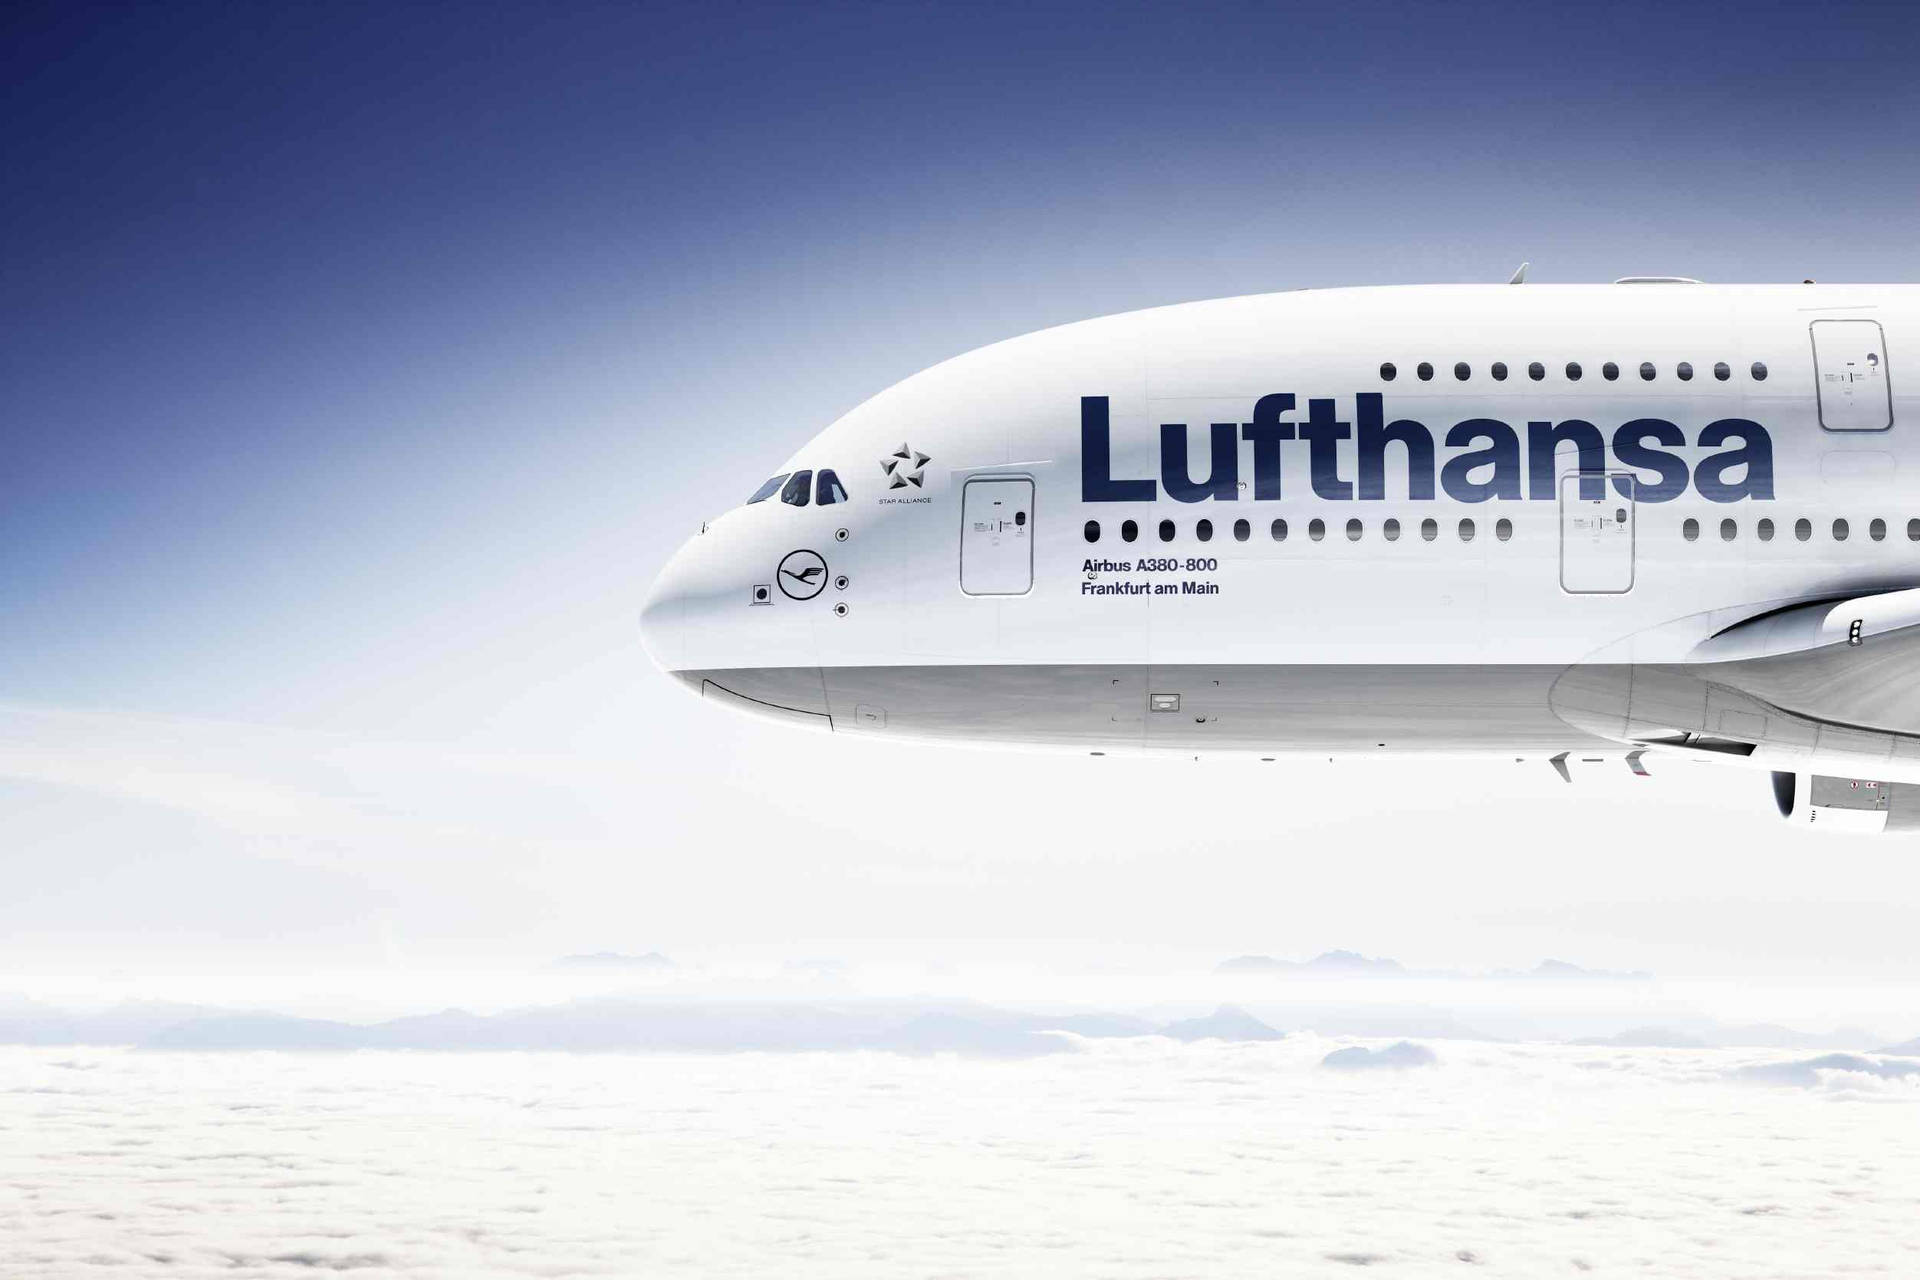 Lufthansa Aircraft In Focus Background